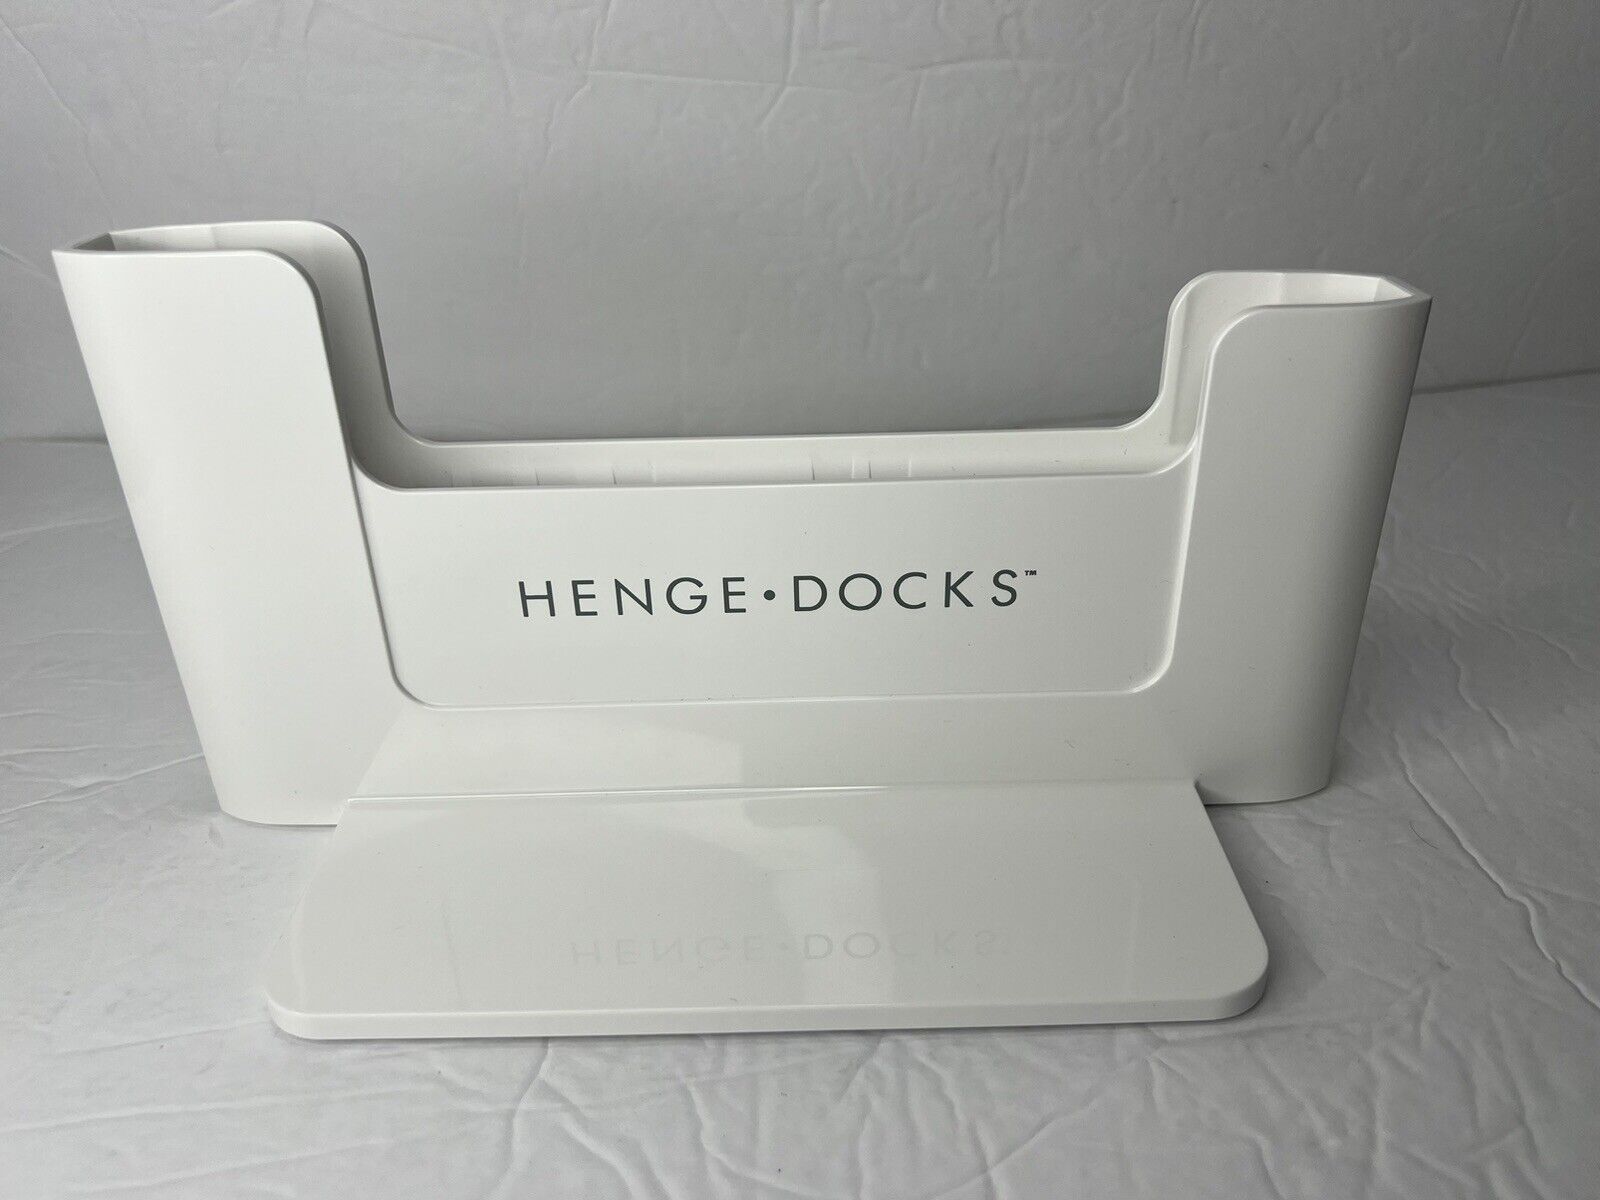 Henge Docks 15-inch MacBook Pro Dock HD01VB15MBP - Version B - With Accessories